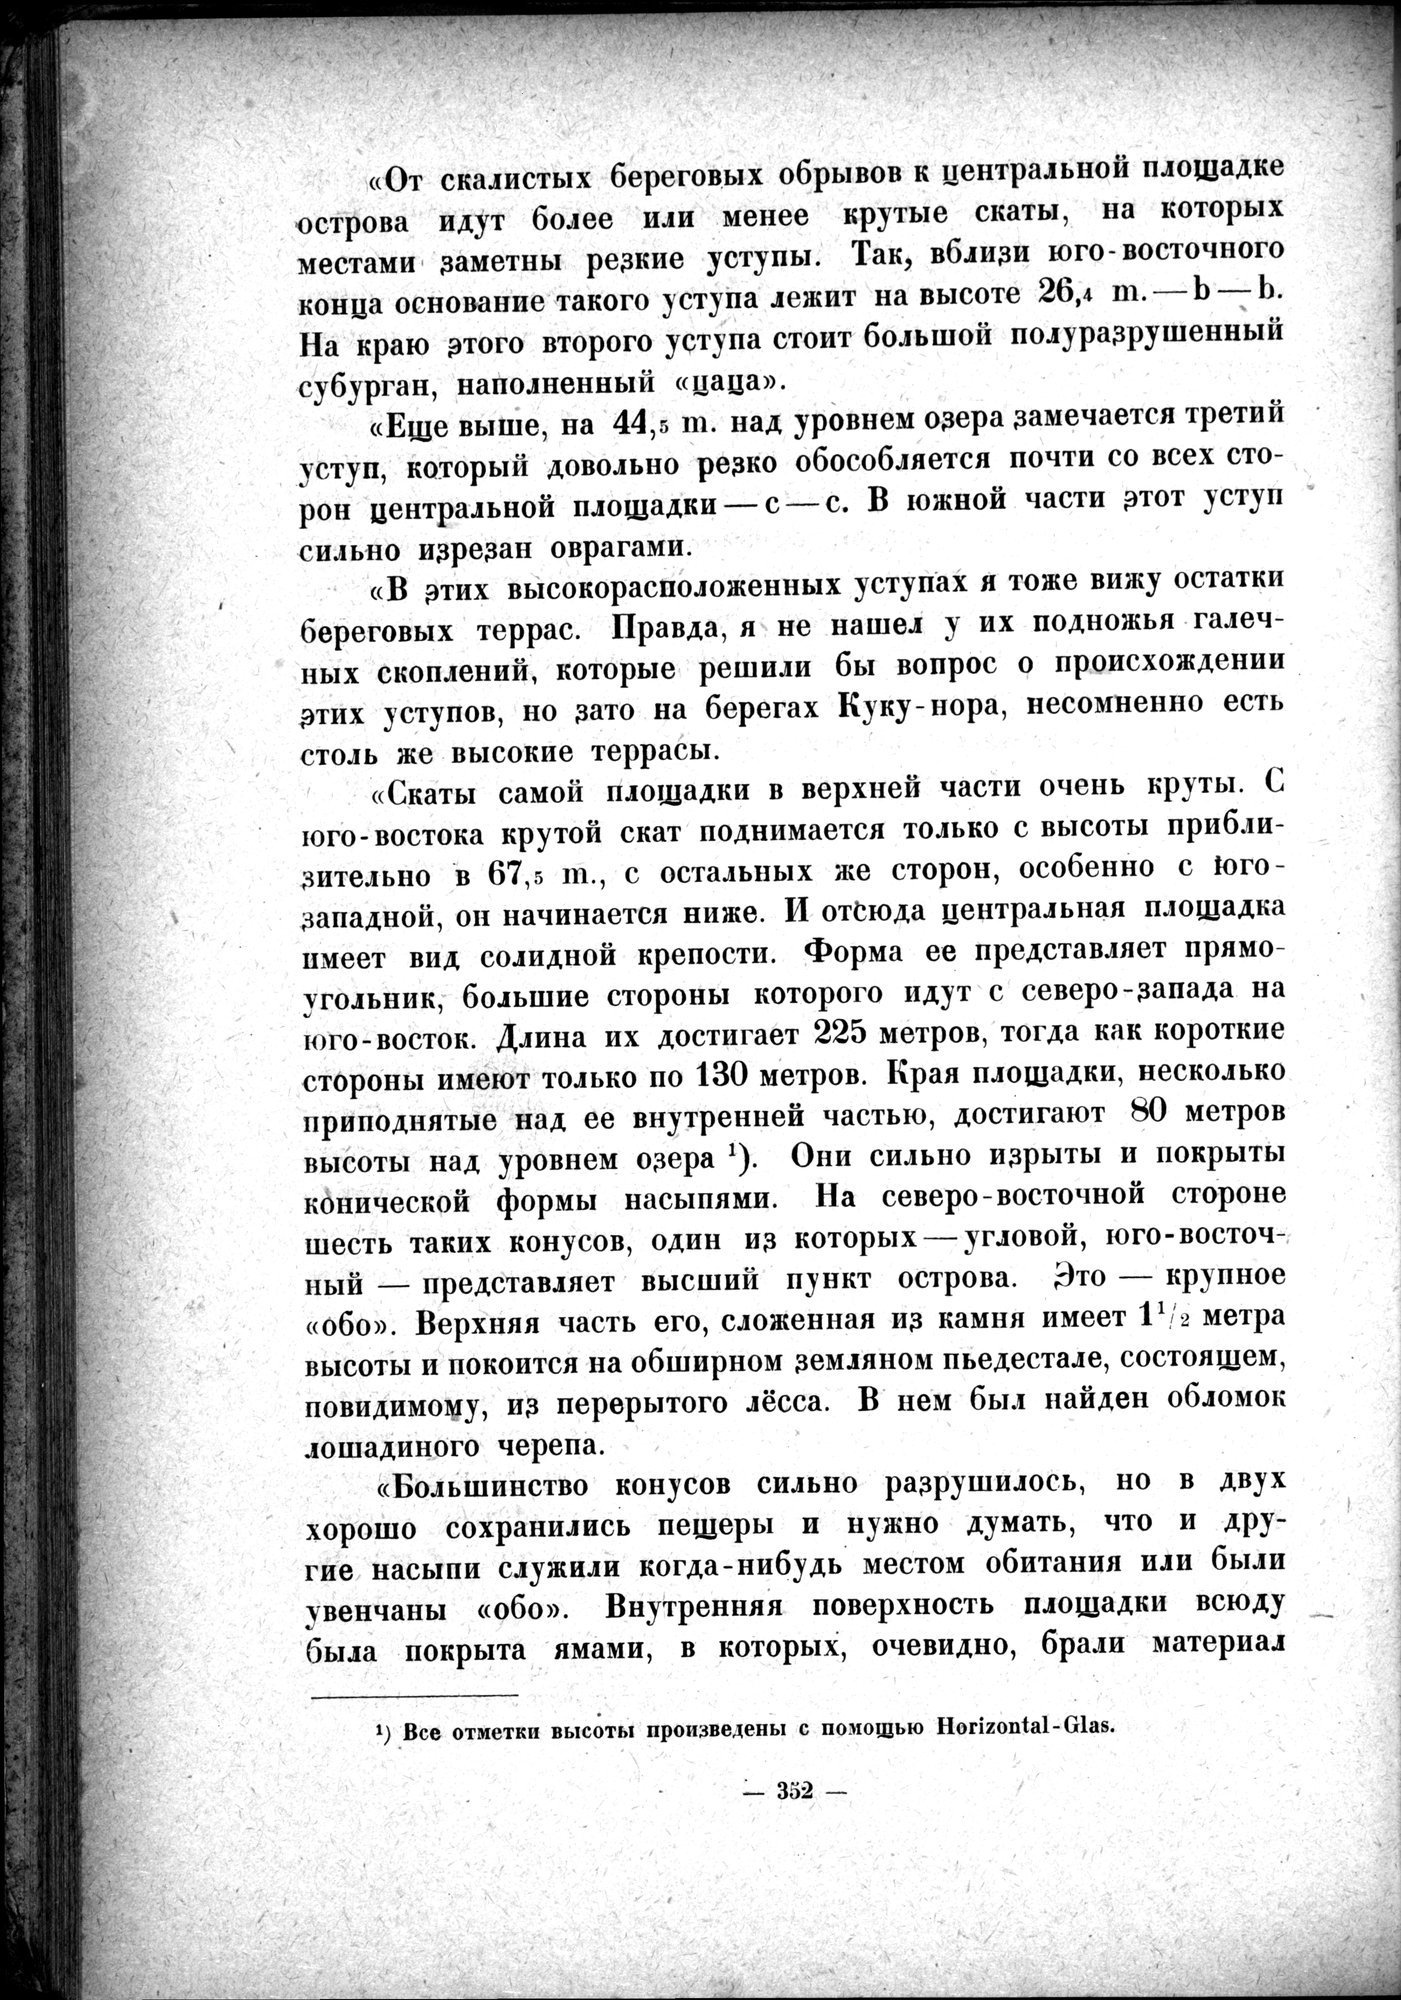 Mongoliya i Amdo i mertby gorod Khara-Khoto : vol.1 / Page 402 (Grayscale High Resolution Image)